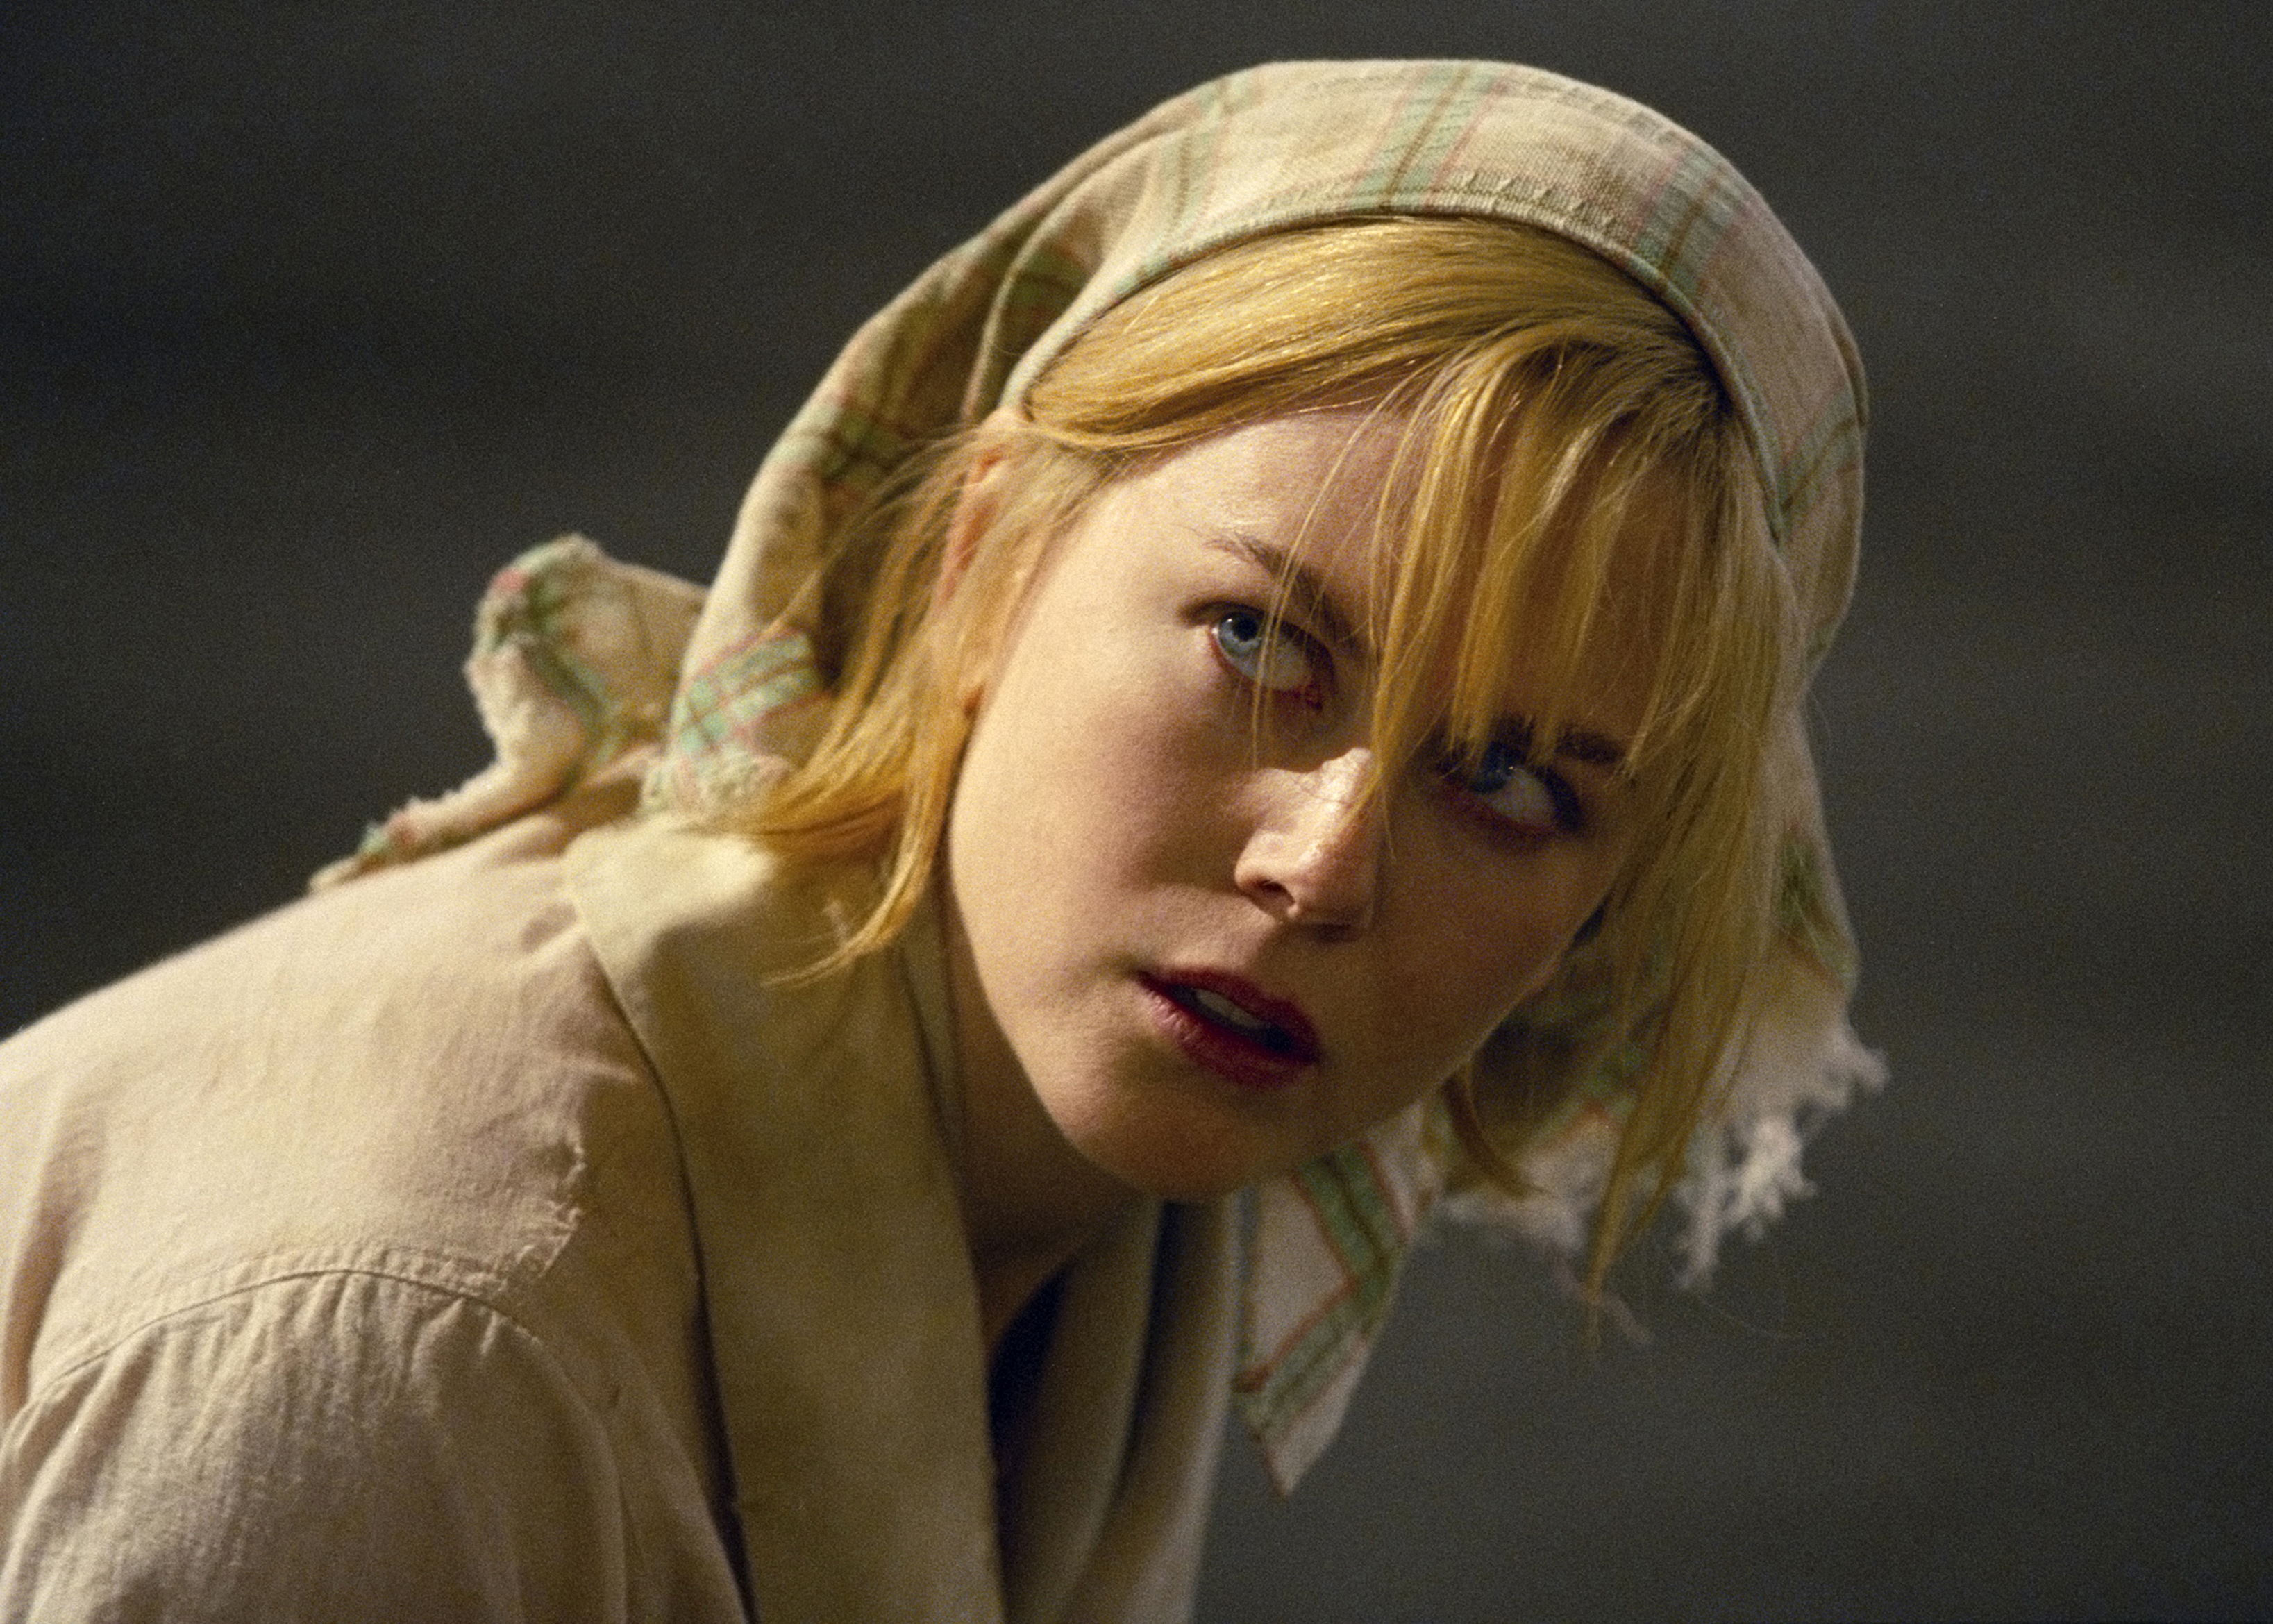 Nicole Kidman as Grace Margaret Mulligan in "Dogville", directed by Lars Von Trier in Trollhättan, Sweden in 2002. | Source: Getty Images